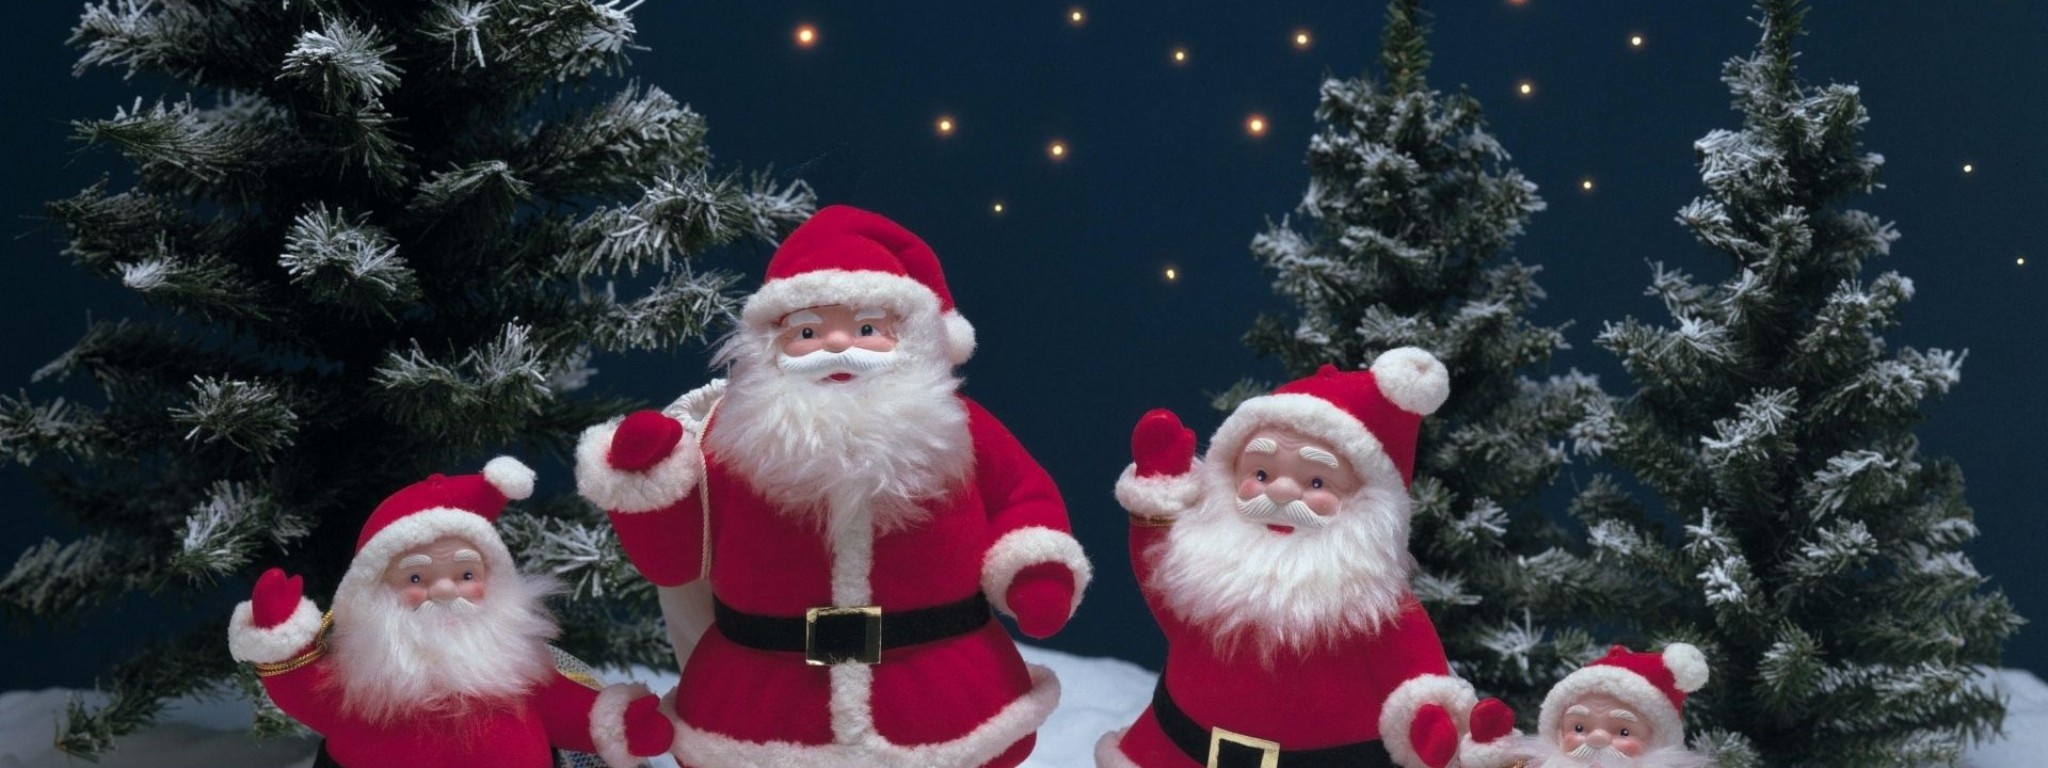 Santa Claus Gifts Christmas Trees Stars Snow